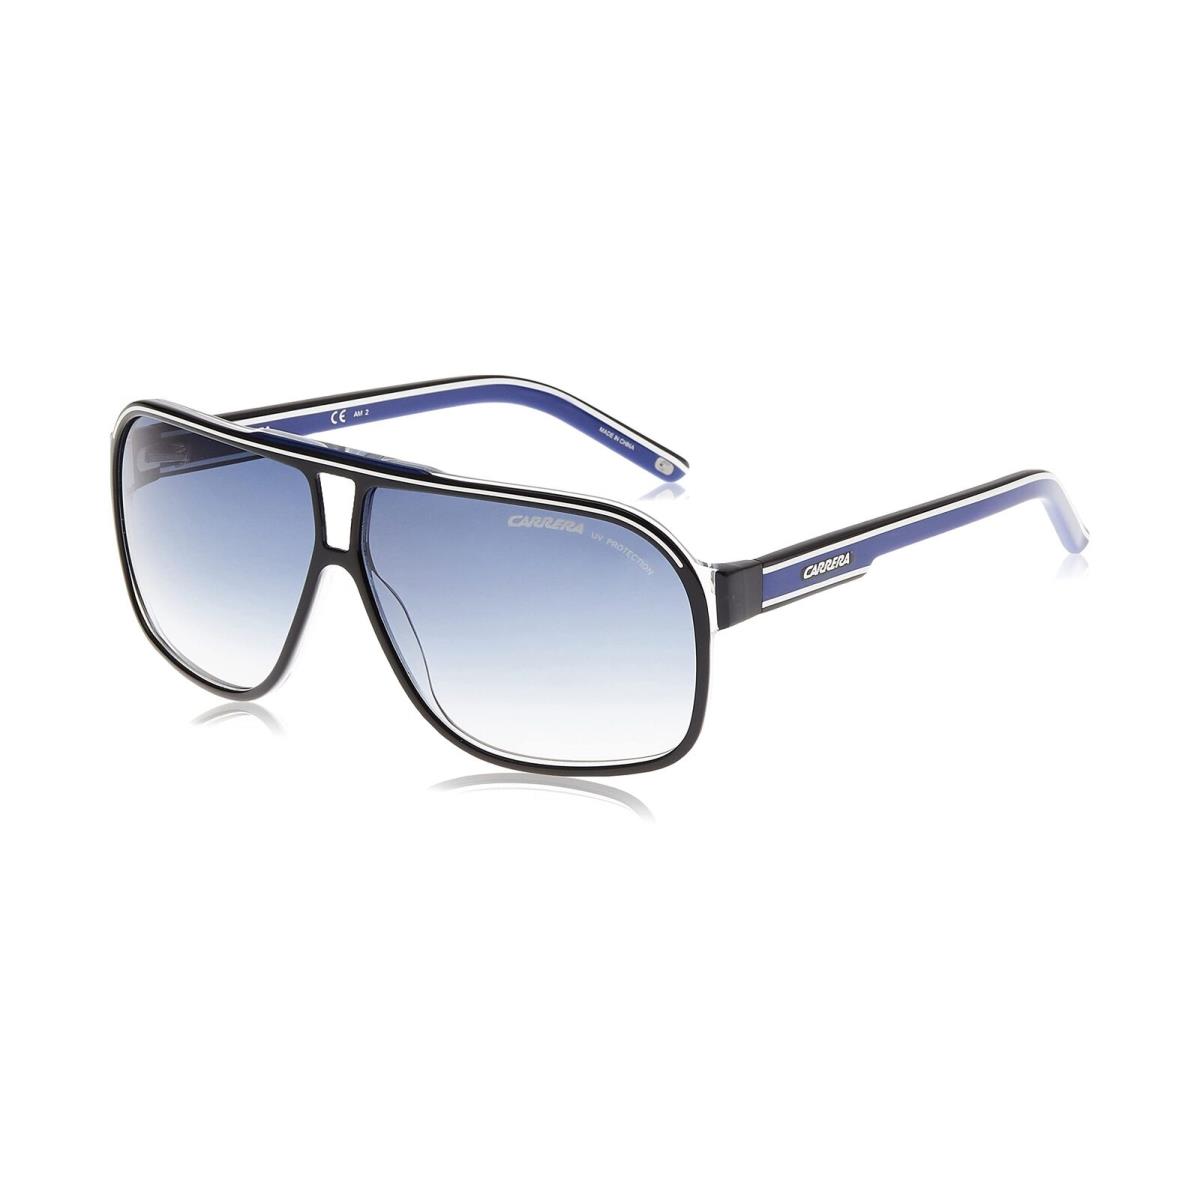 Carrera Grand Prix 2/S Pilot Sunglasses Black/blue Shaded 64 Millimeters